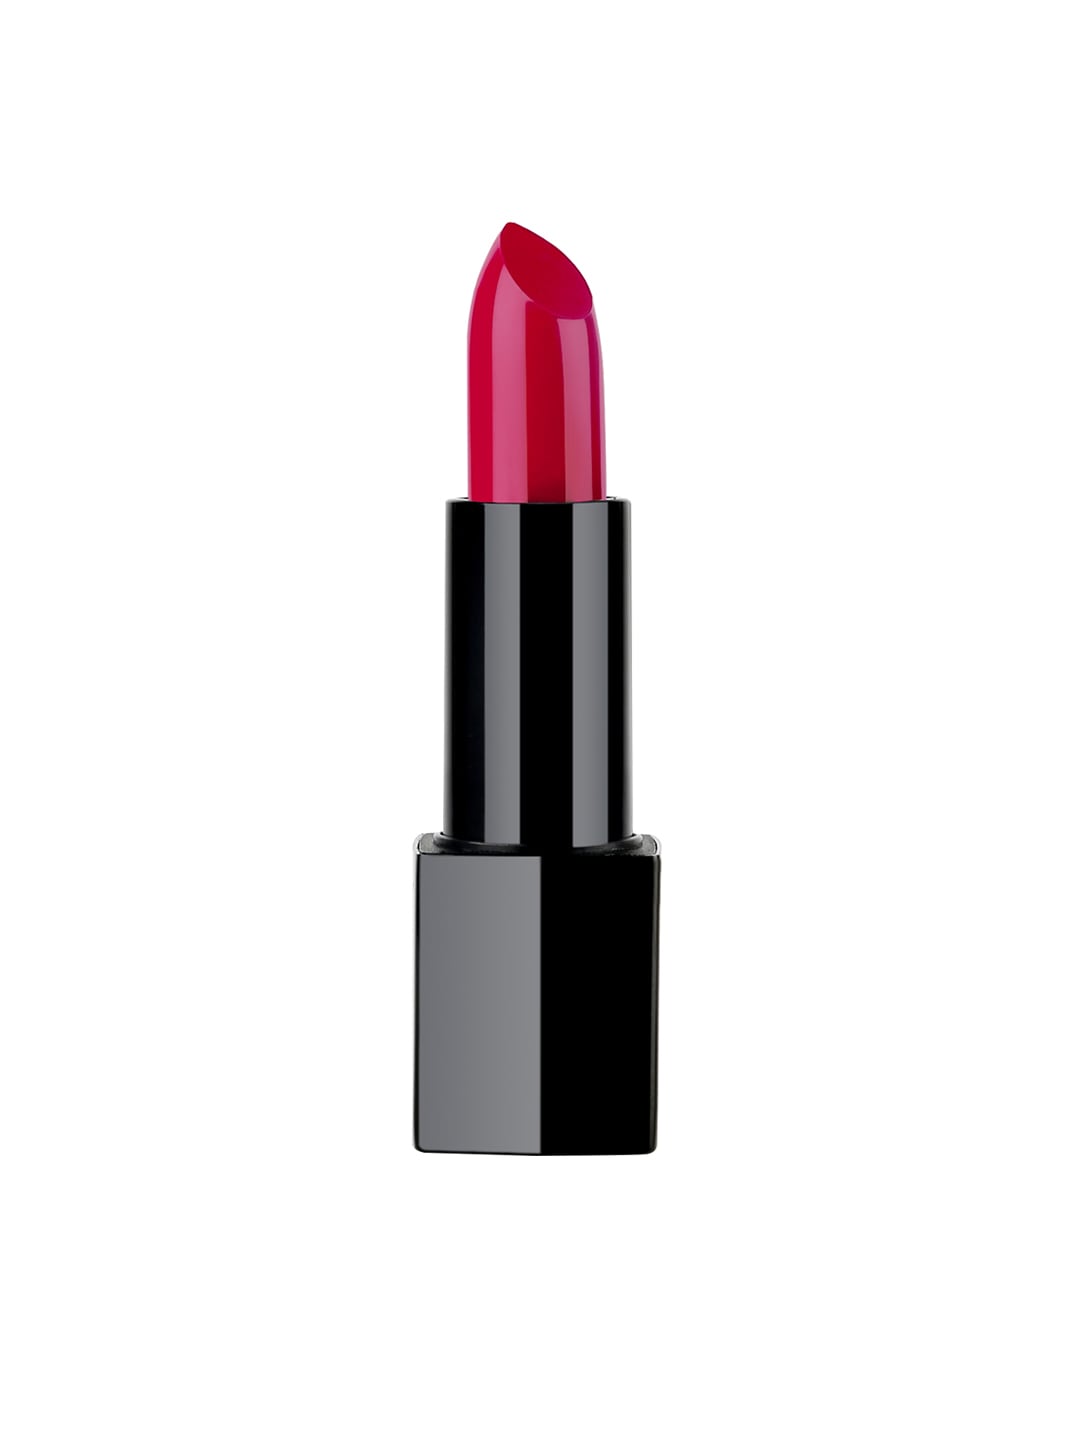 PAC Lip Dip Lipstick-Weekender 05 Price in India